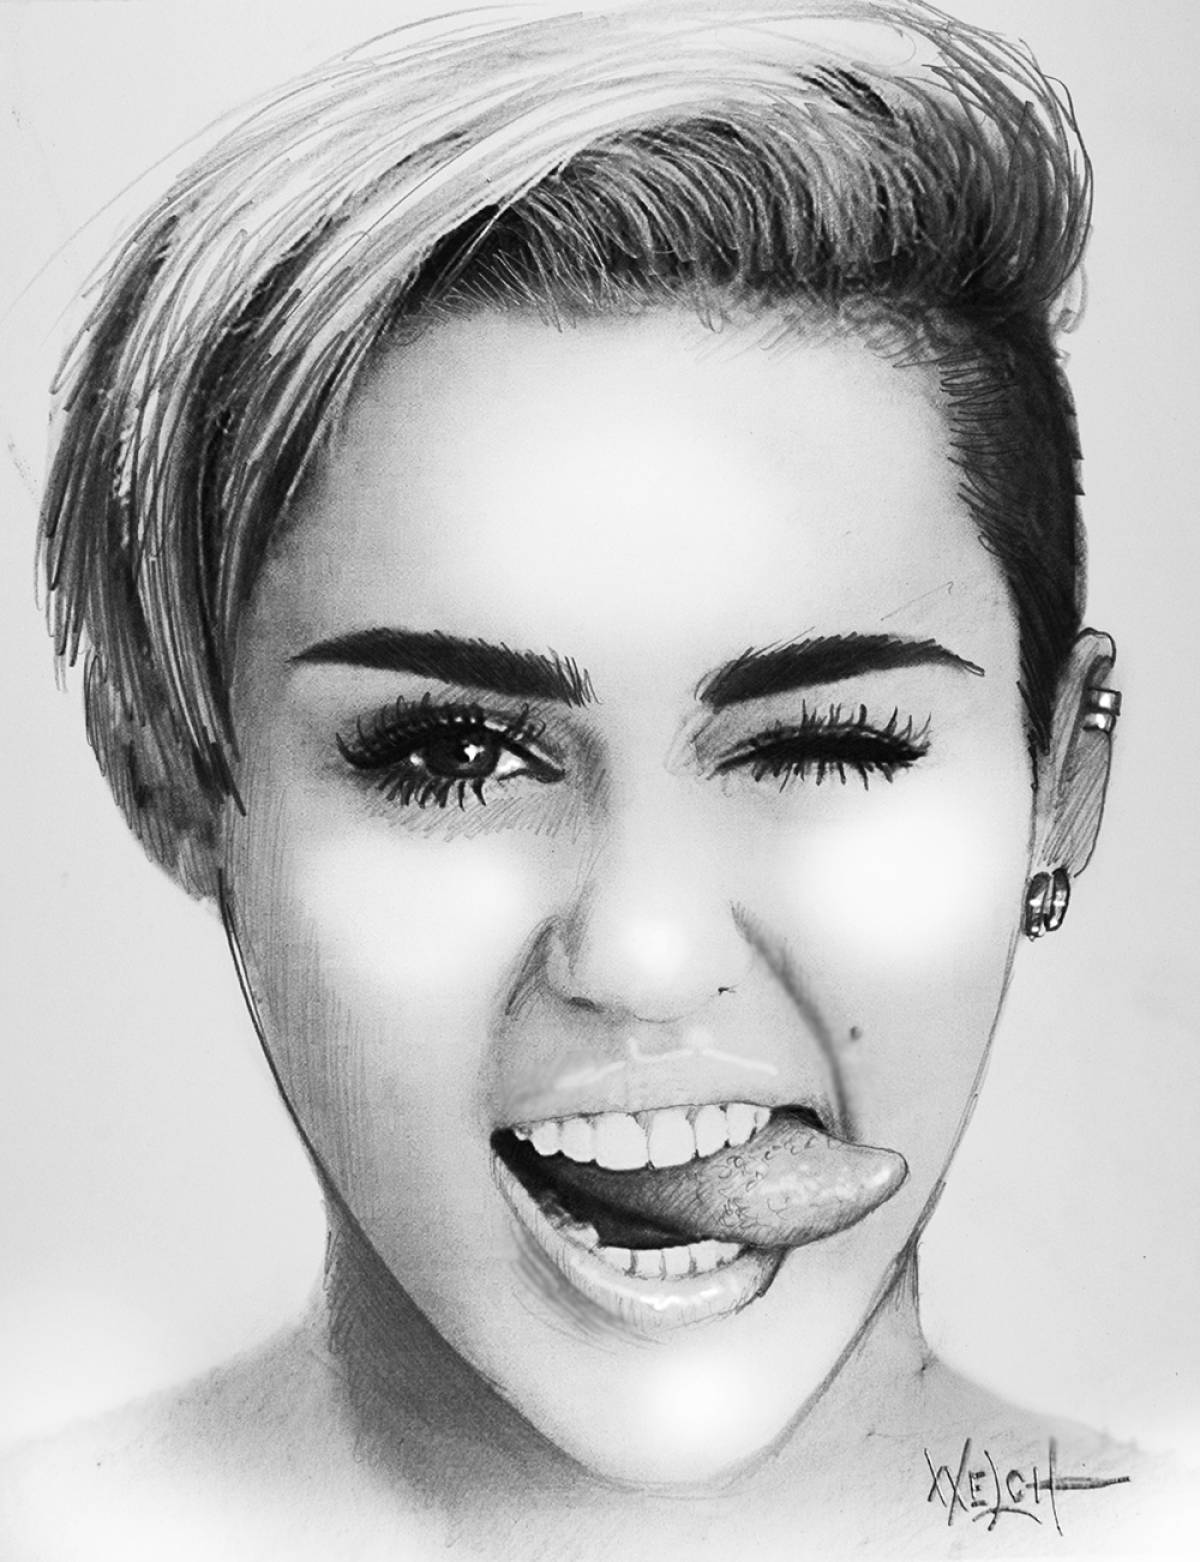 Miley Cyrus' bold coloring